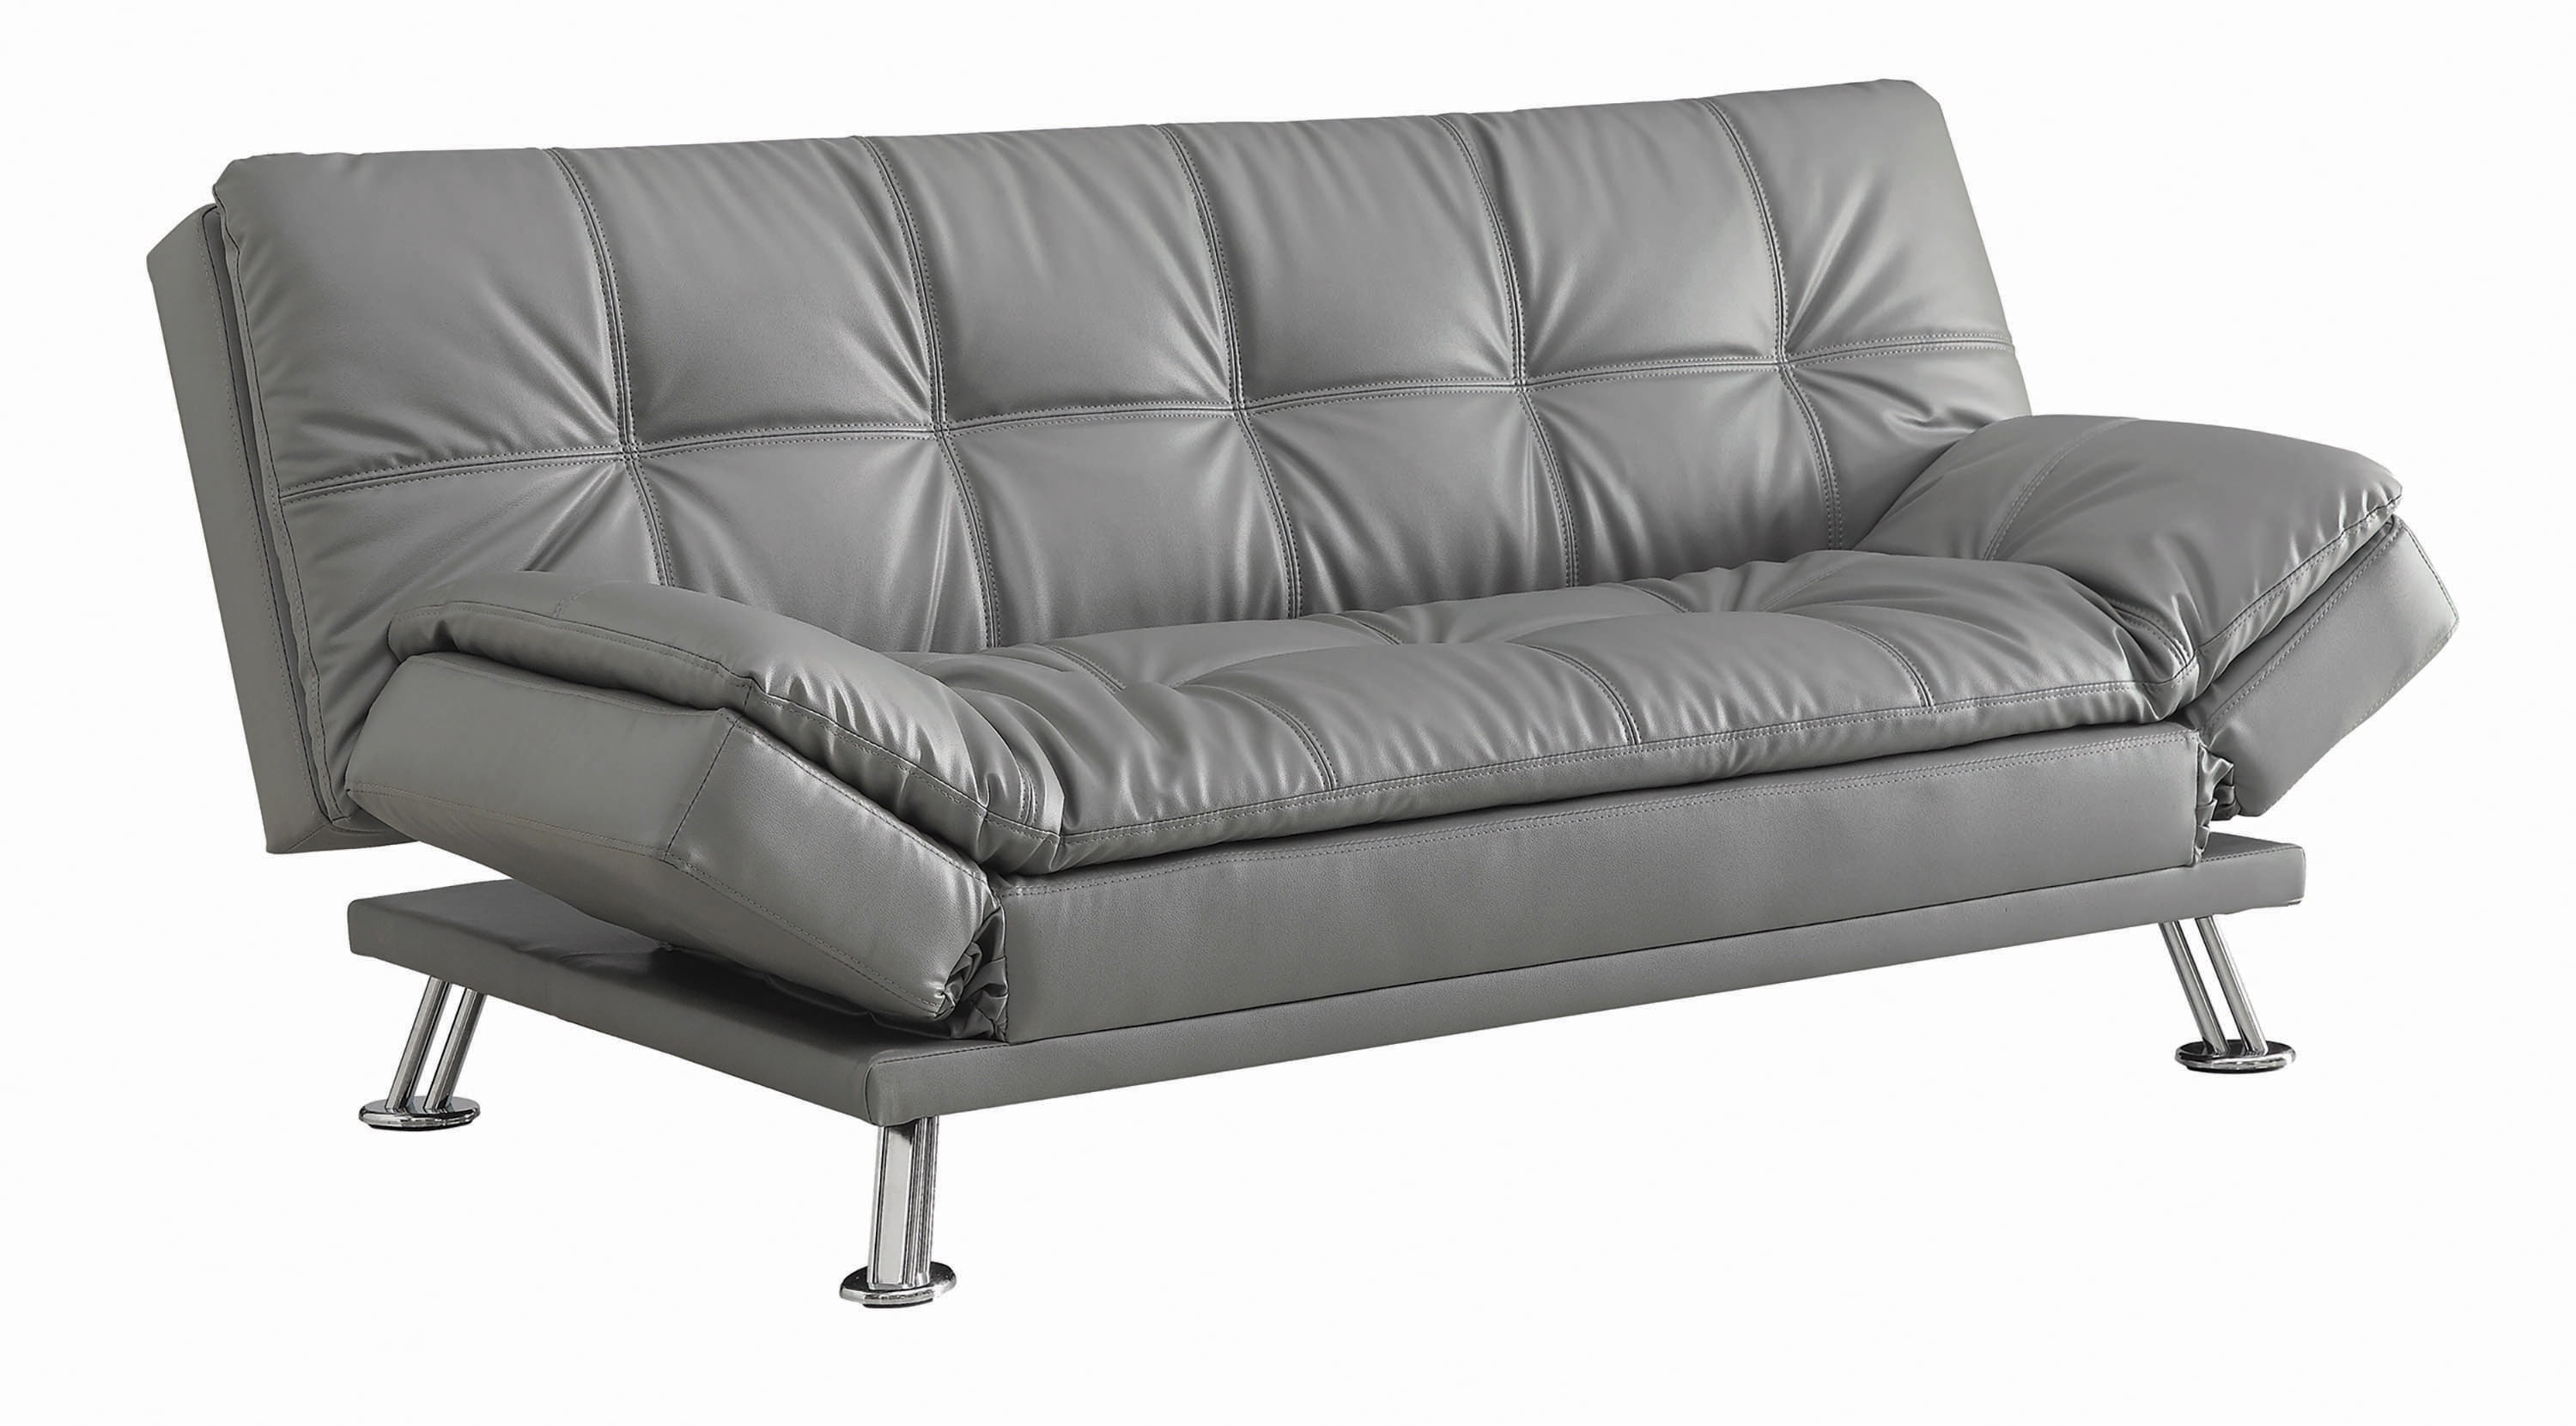 walmart sofa bed in store